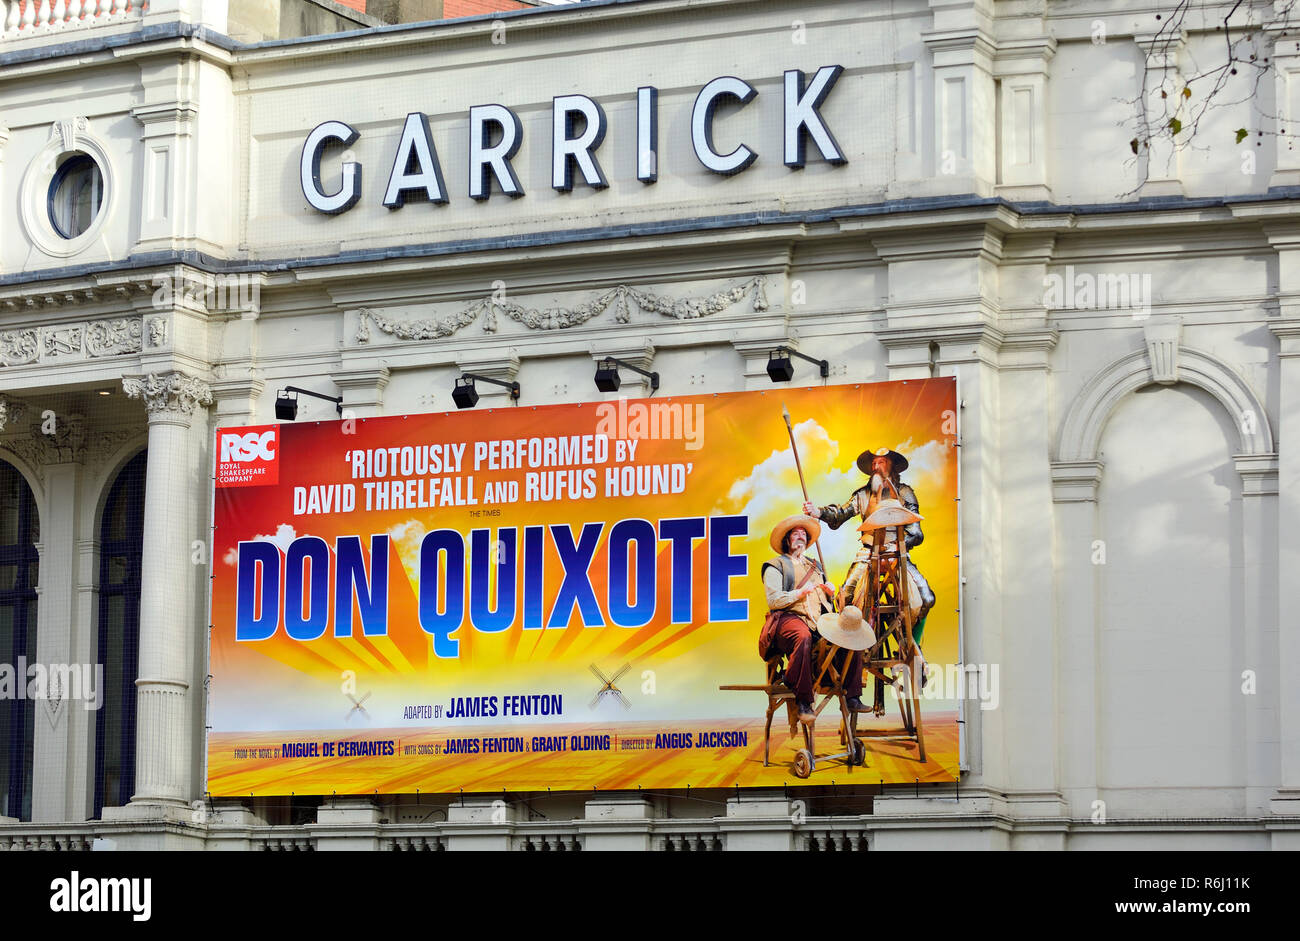 'Don Quixote' at the garrick Theatre, London, England, UK. December 2018 Stock Photo